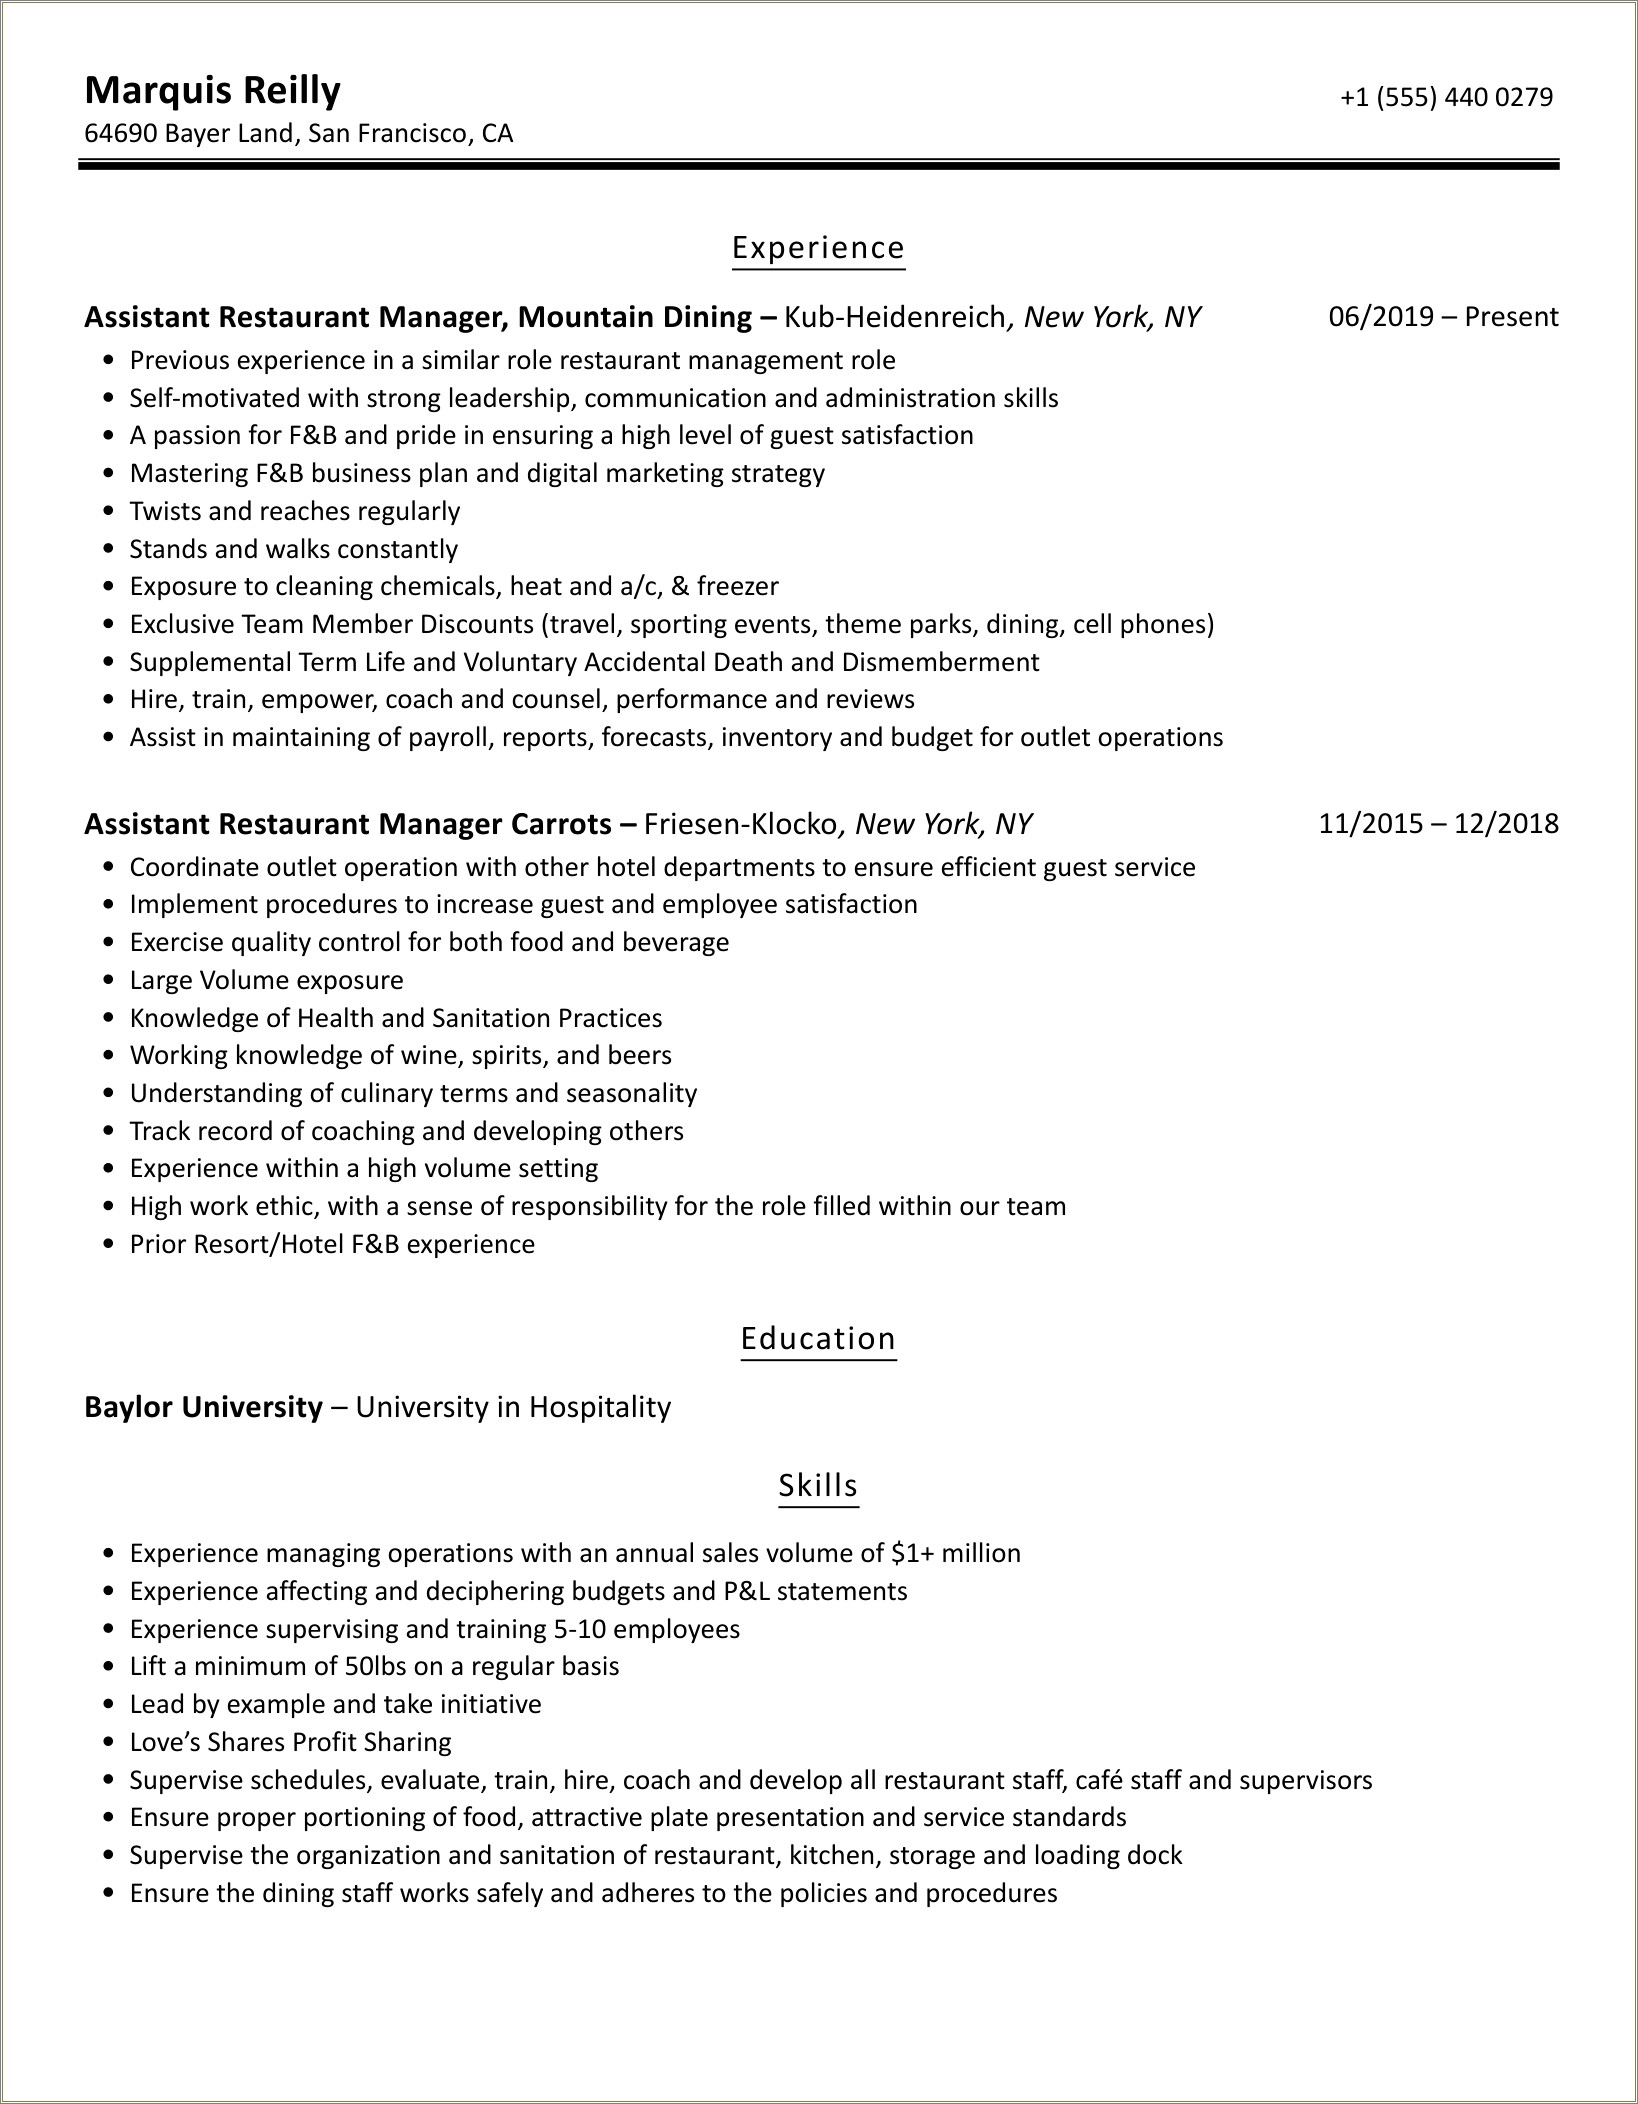 Resume Description Help For Pizza Hut Shift Manager